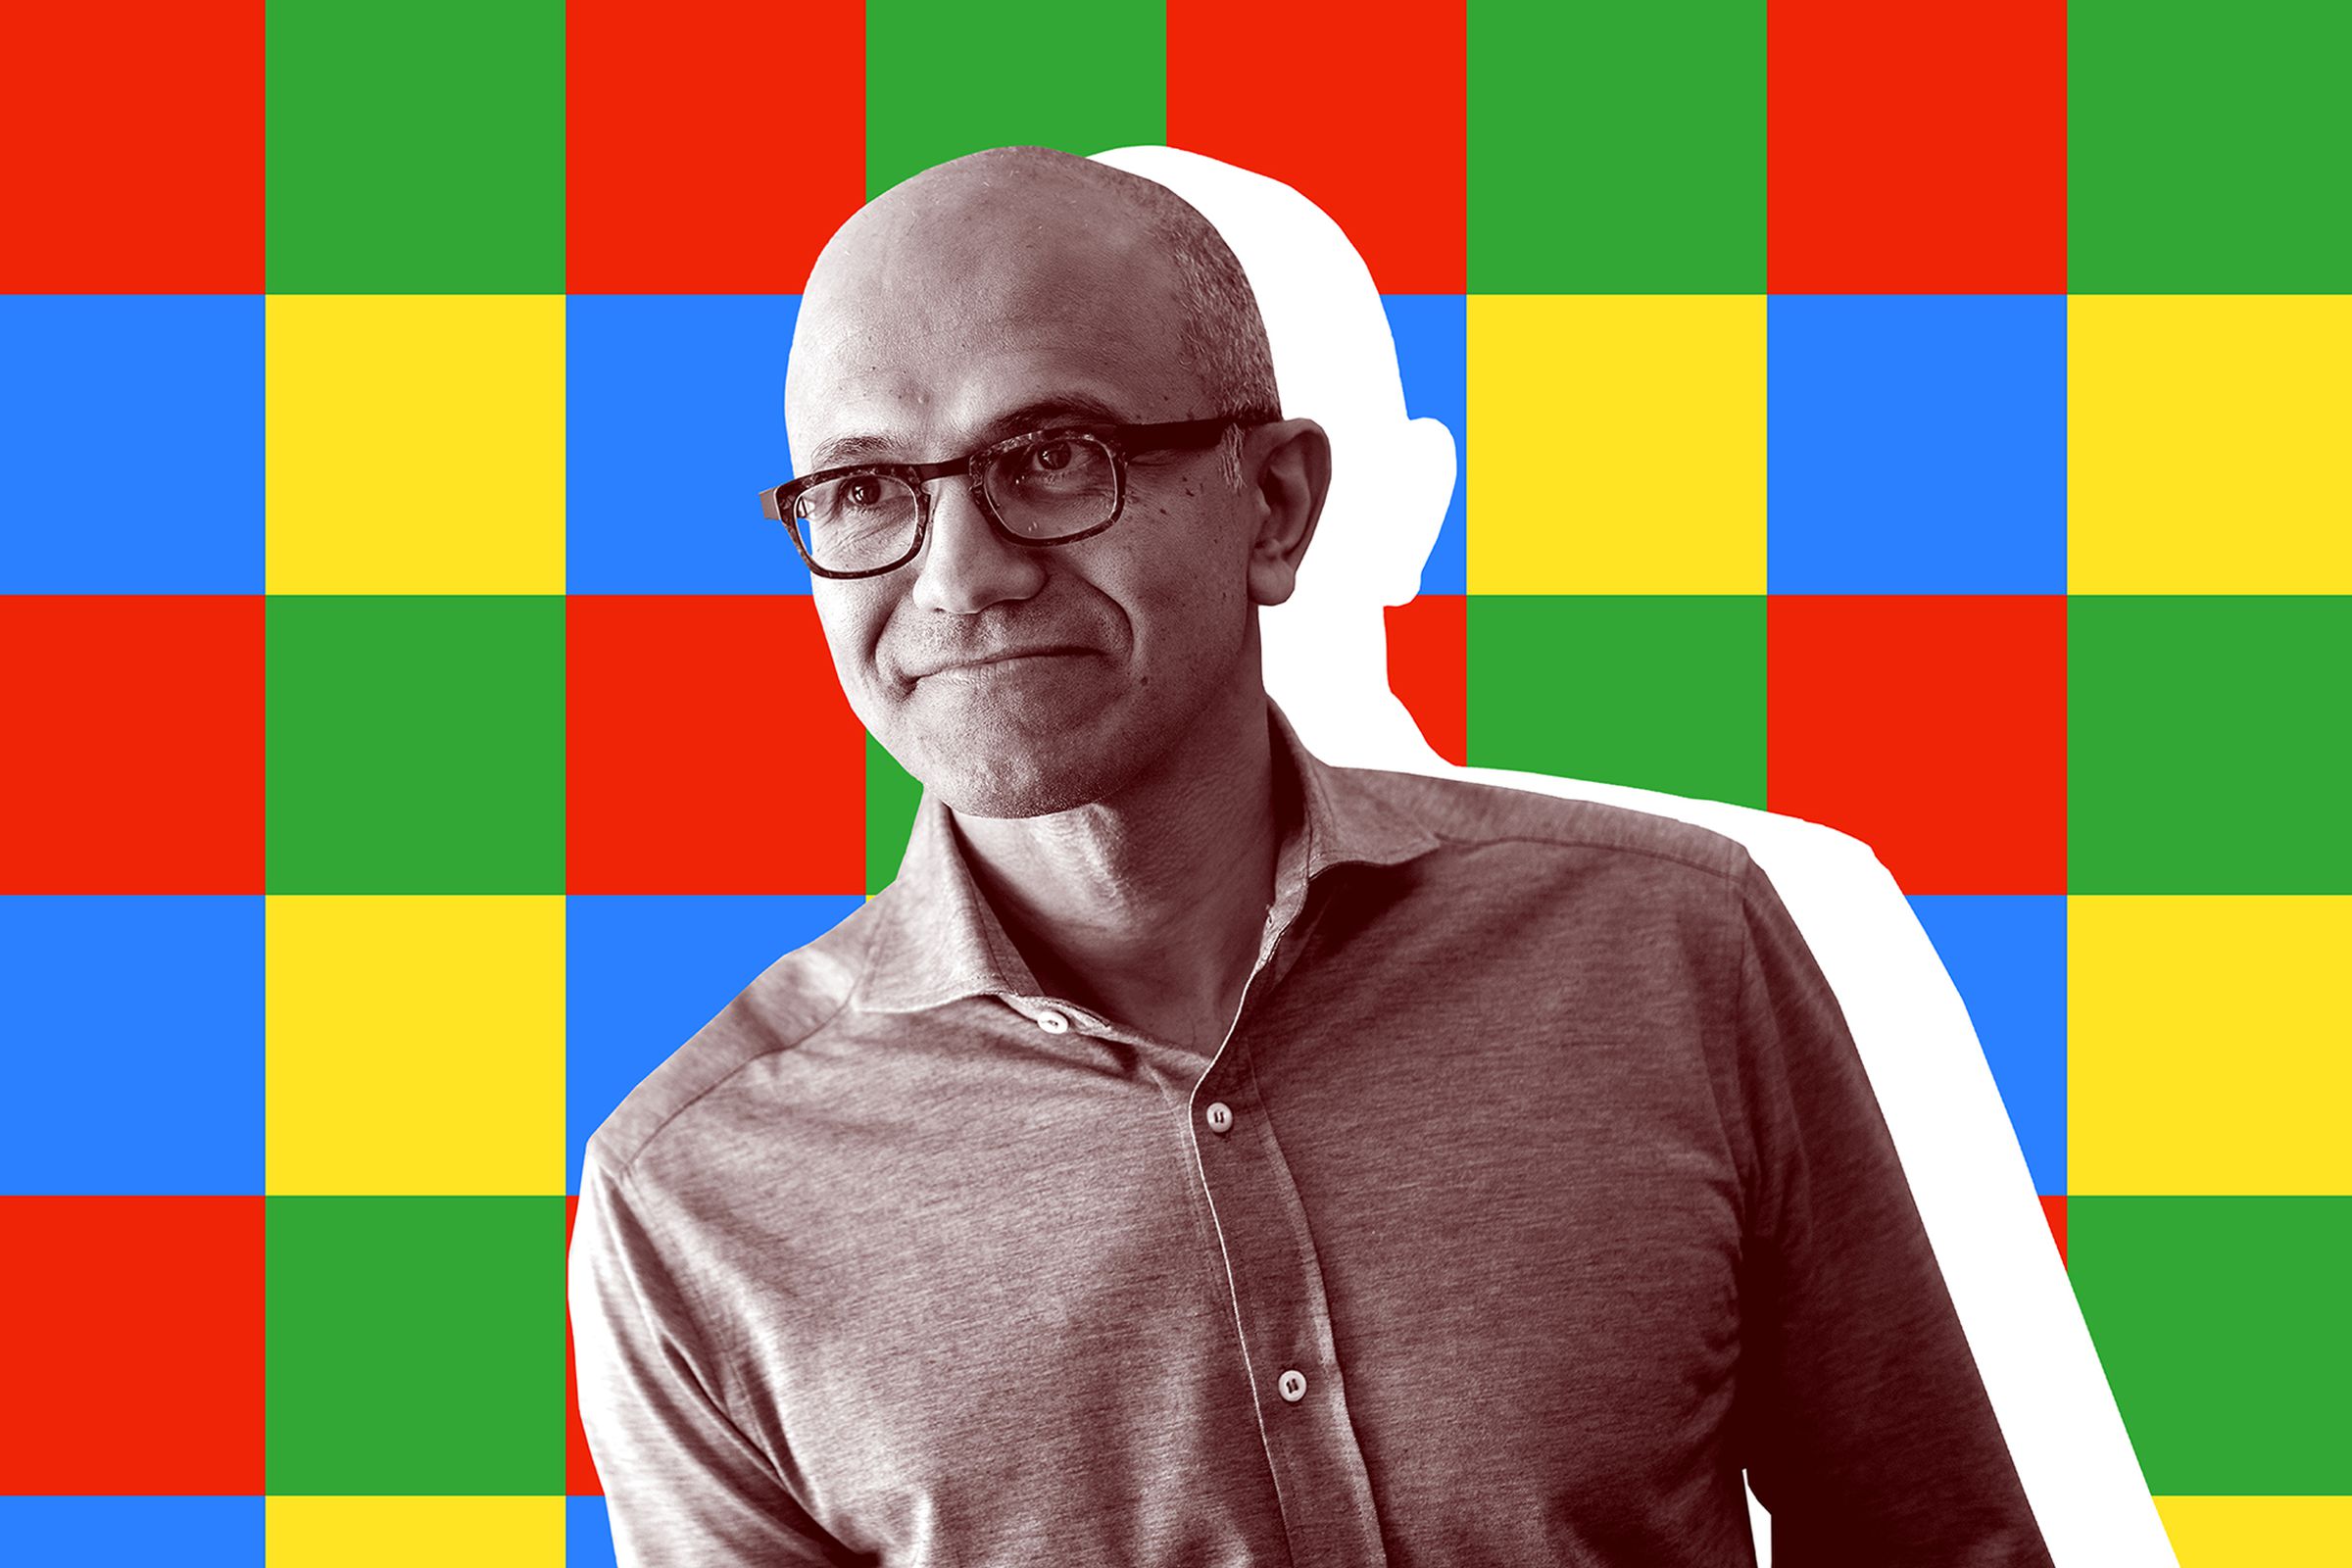 Illustration of Microsoft CEO Satya Nadella